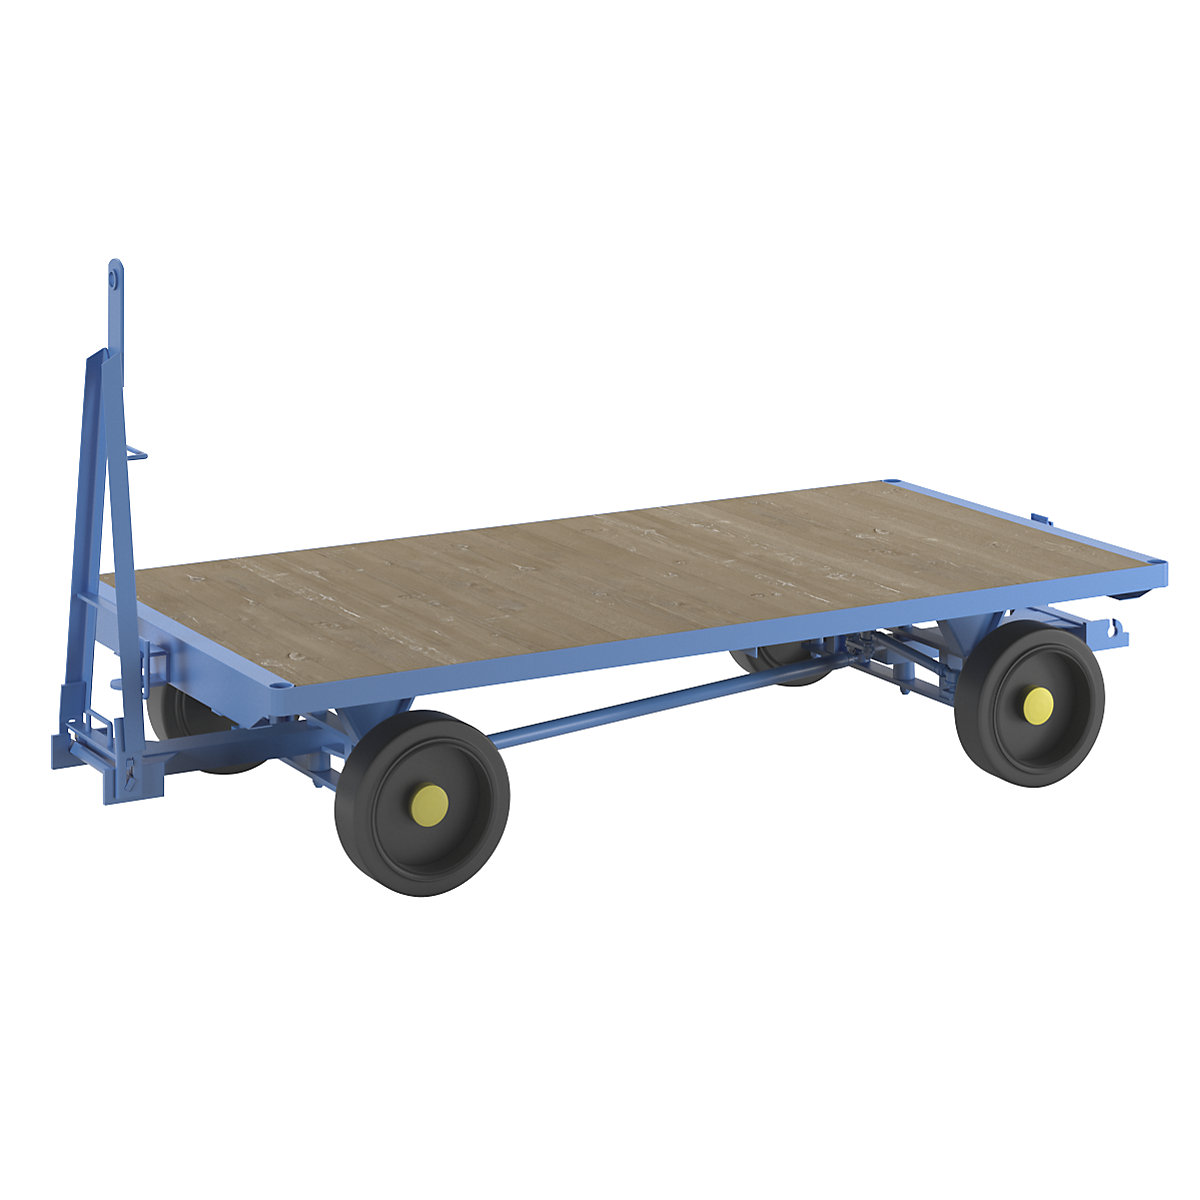 Trailer – eurokraft pro, 4-wheel linked ackerman steering, max. load 5 t, platform 2.5 x 1.25 m, light blue-9